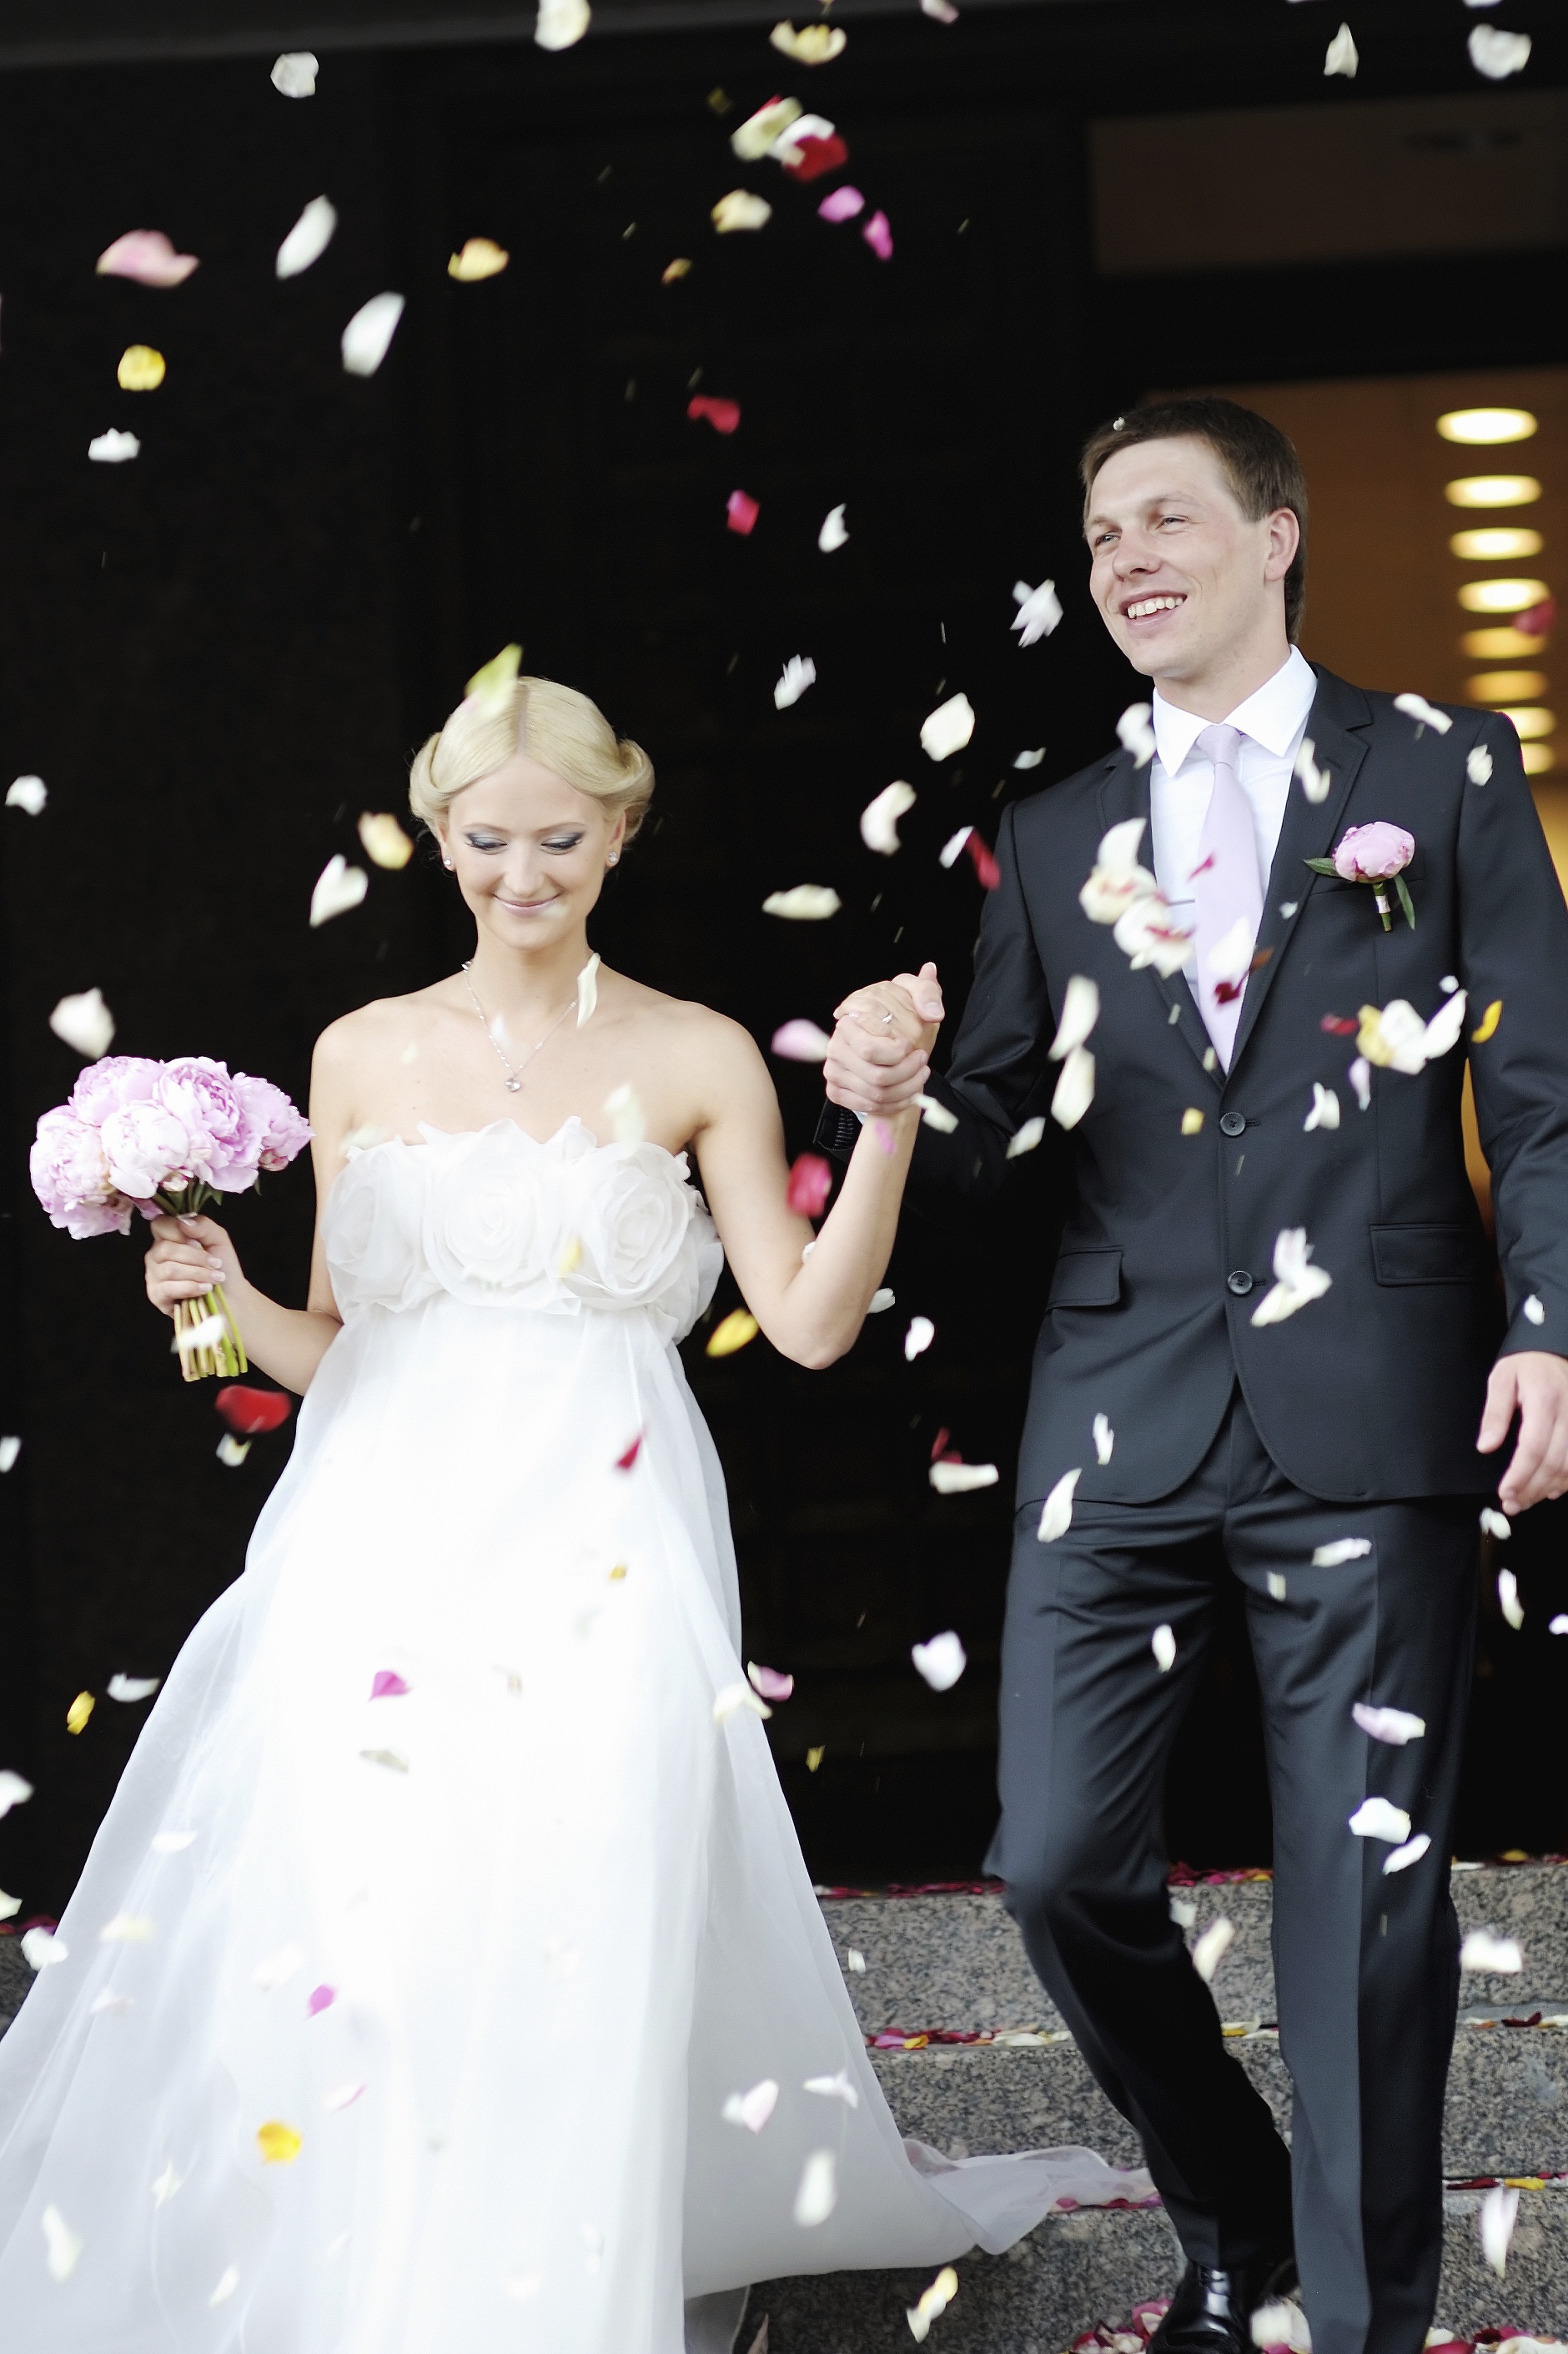 Six Ways to Make Your Wedding Ceremony Special